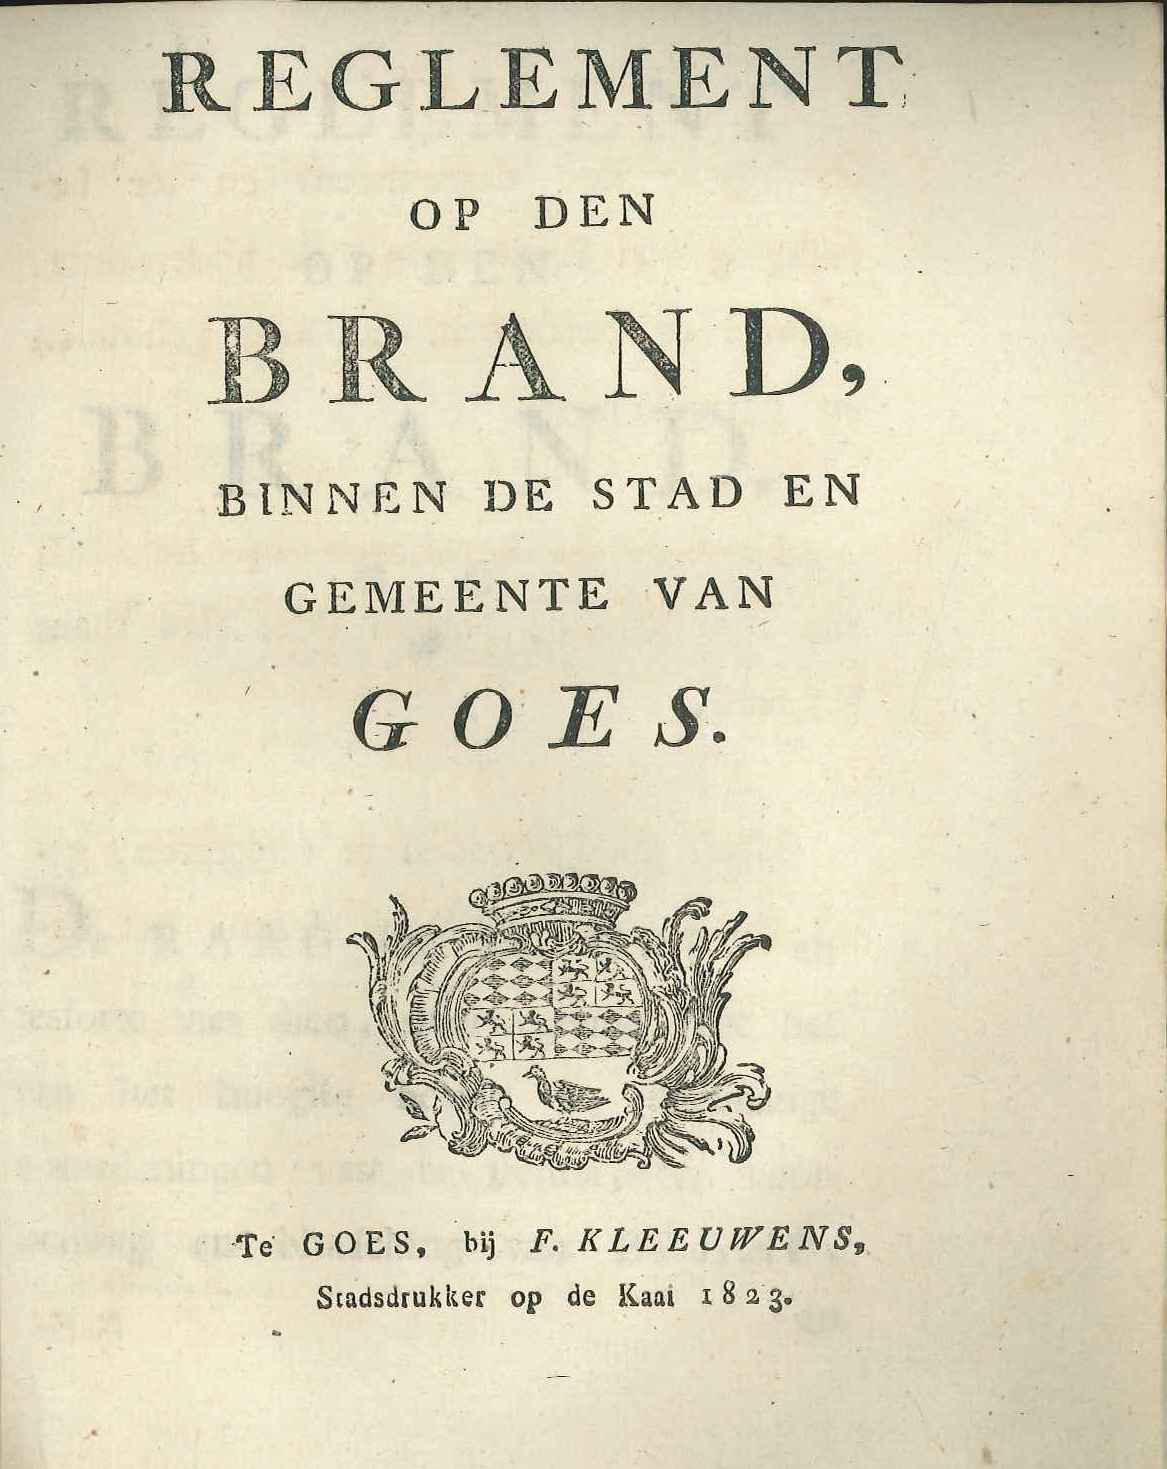 Titelblad van het reglement op brand, 1823. GAG.ASG.inv.nr. 1850.